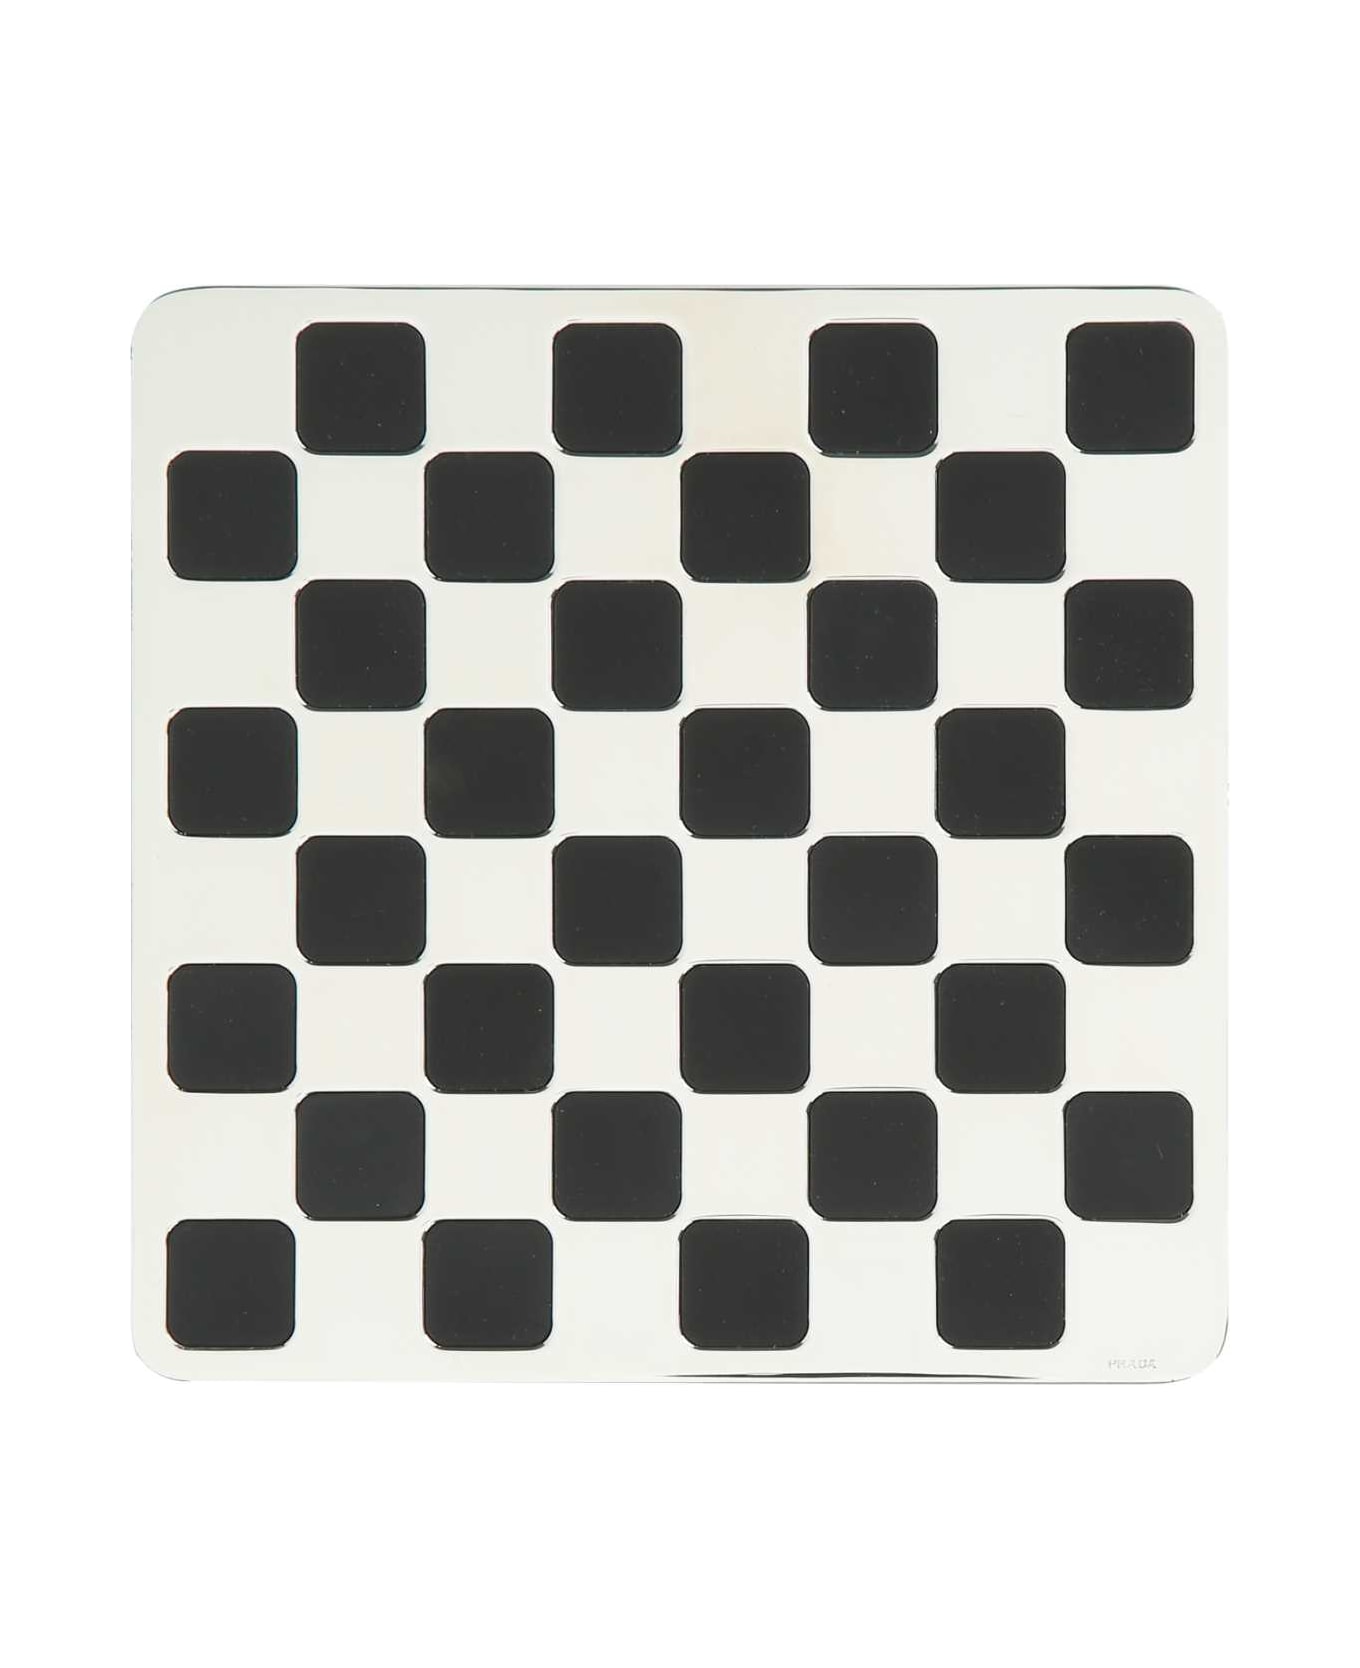 Prada Checkers Game Kit - NERO インテリア雑貨